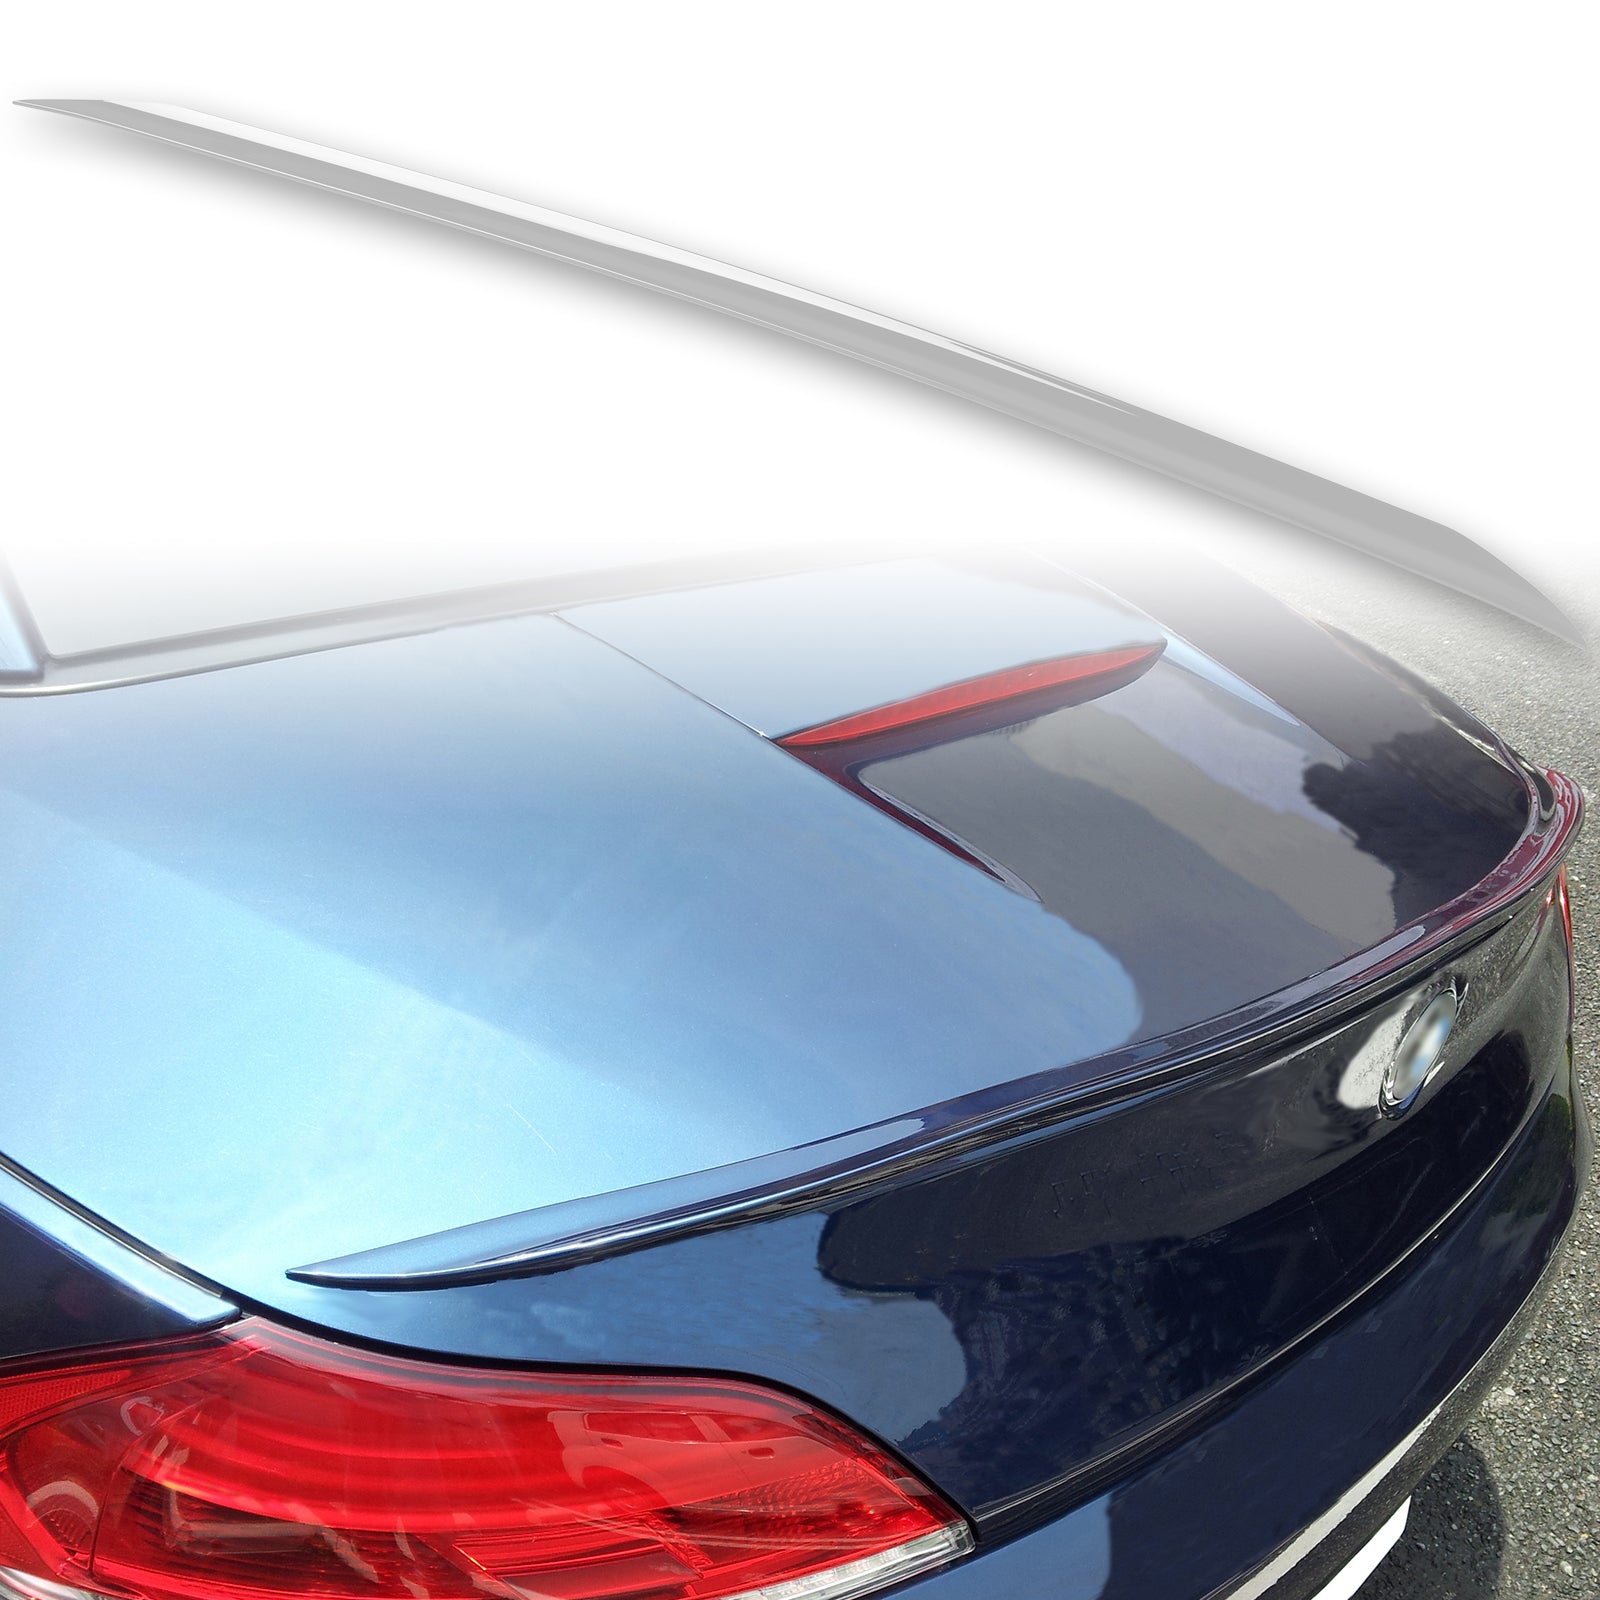 [FYRALIP] トランクスポイラー 純正色塗装済 Triplet BMW用 Z4 E89 ロードスター モデル用 外装 エアロ パーツ  両面テープ取付